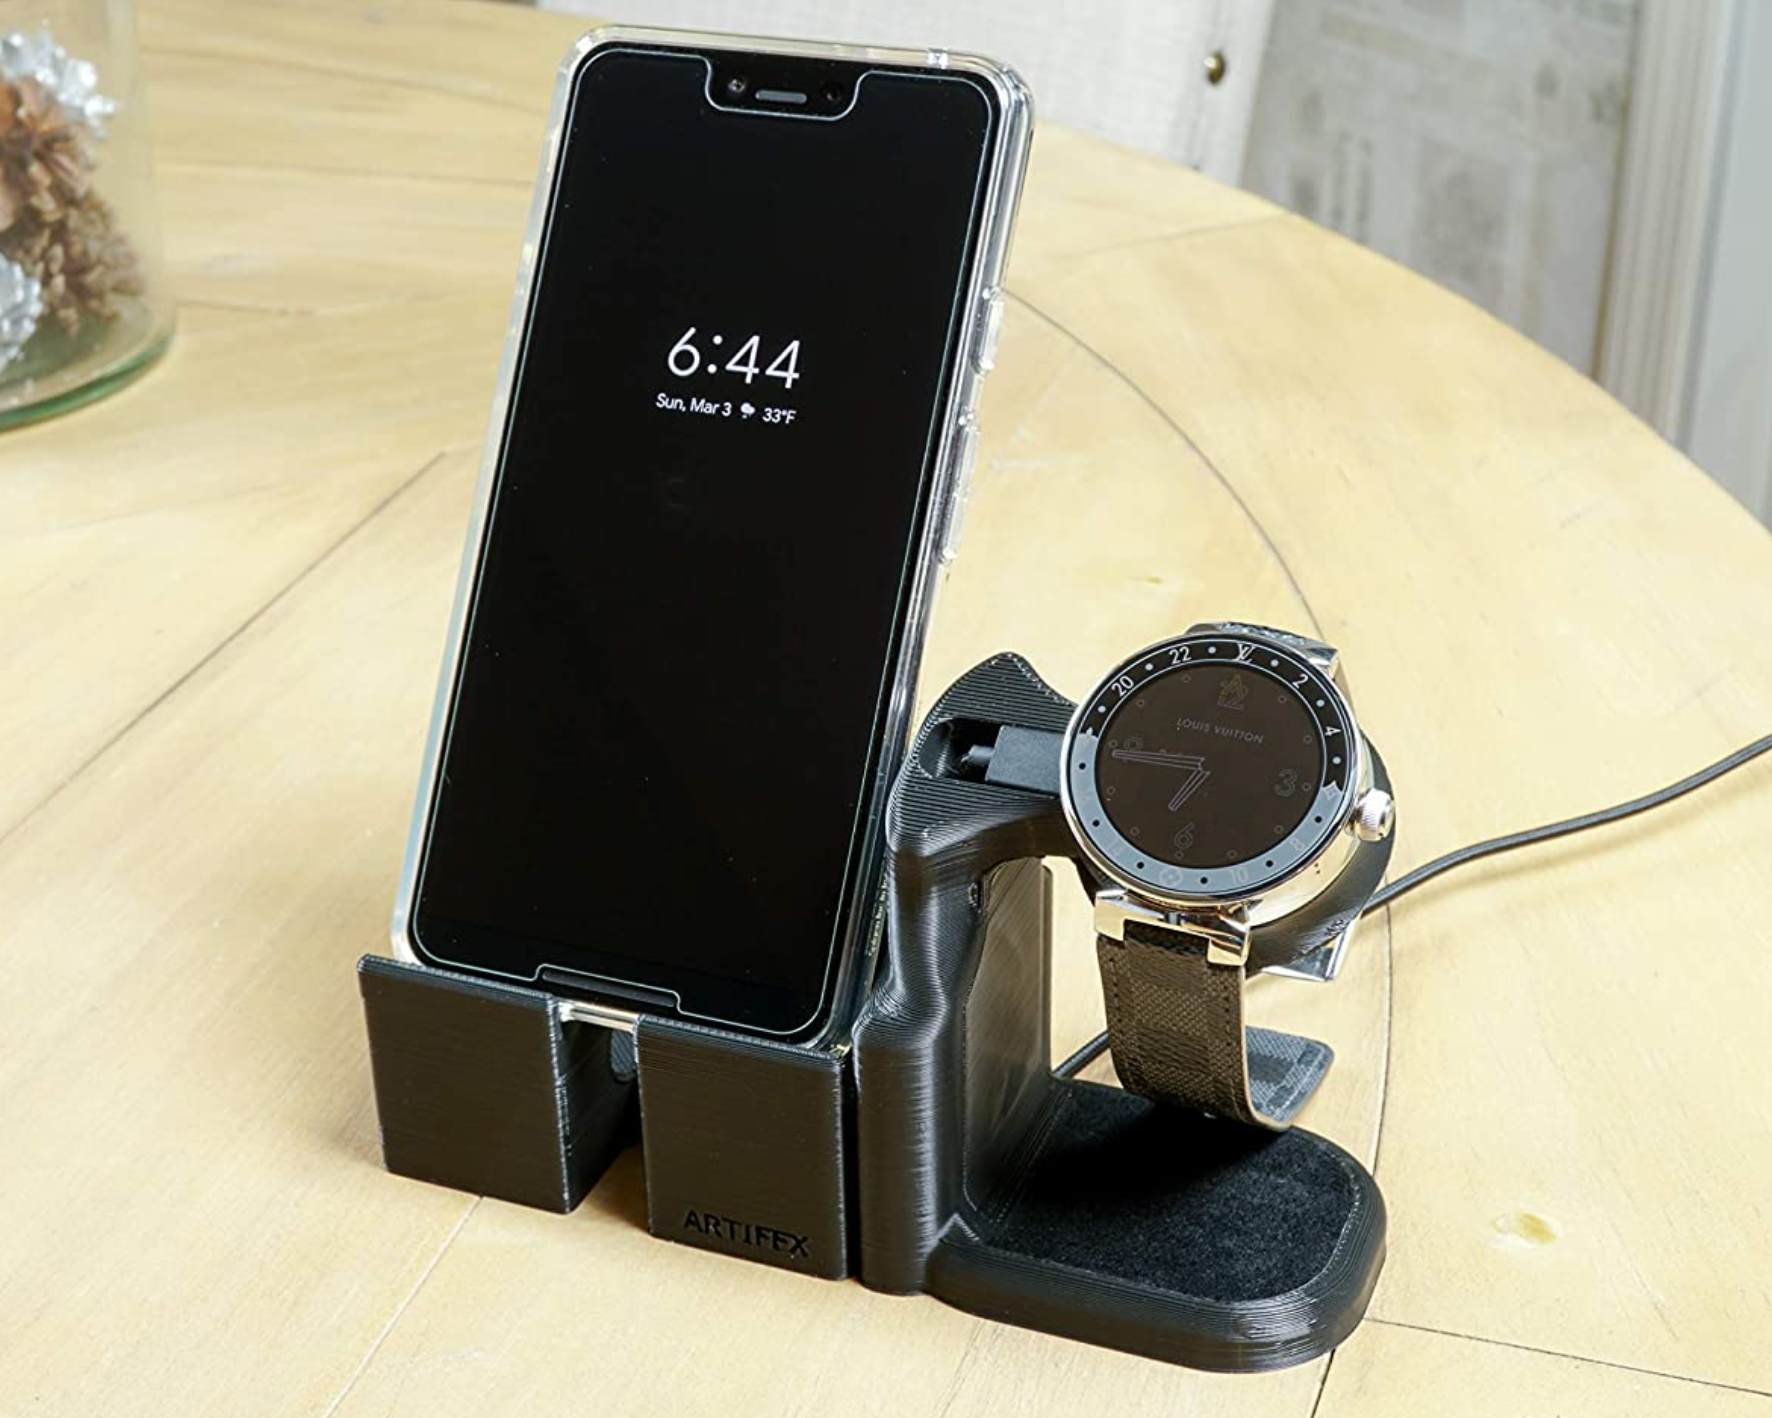 Louis Vuitton Tambour Horizon Smartwatch Charging Stand (Strap Combo)